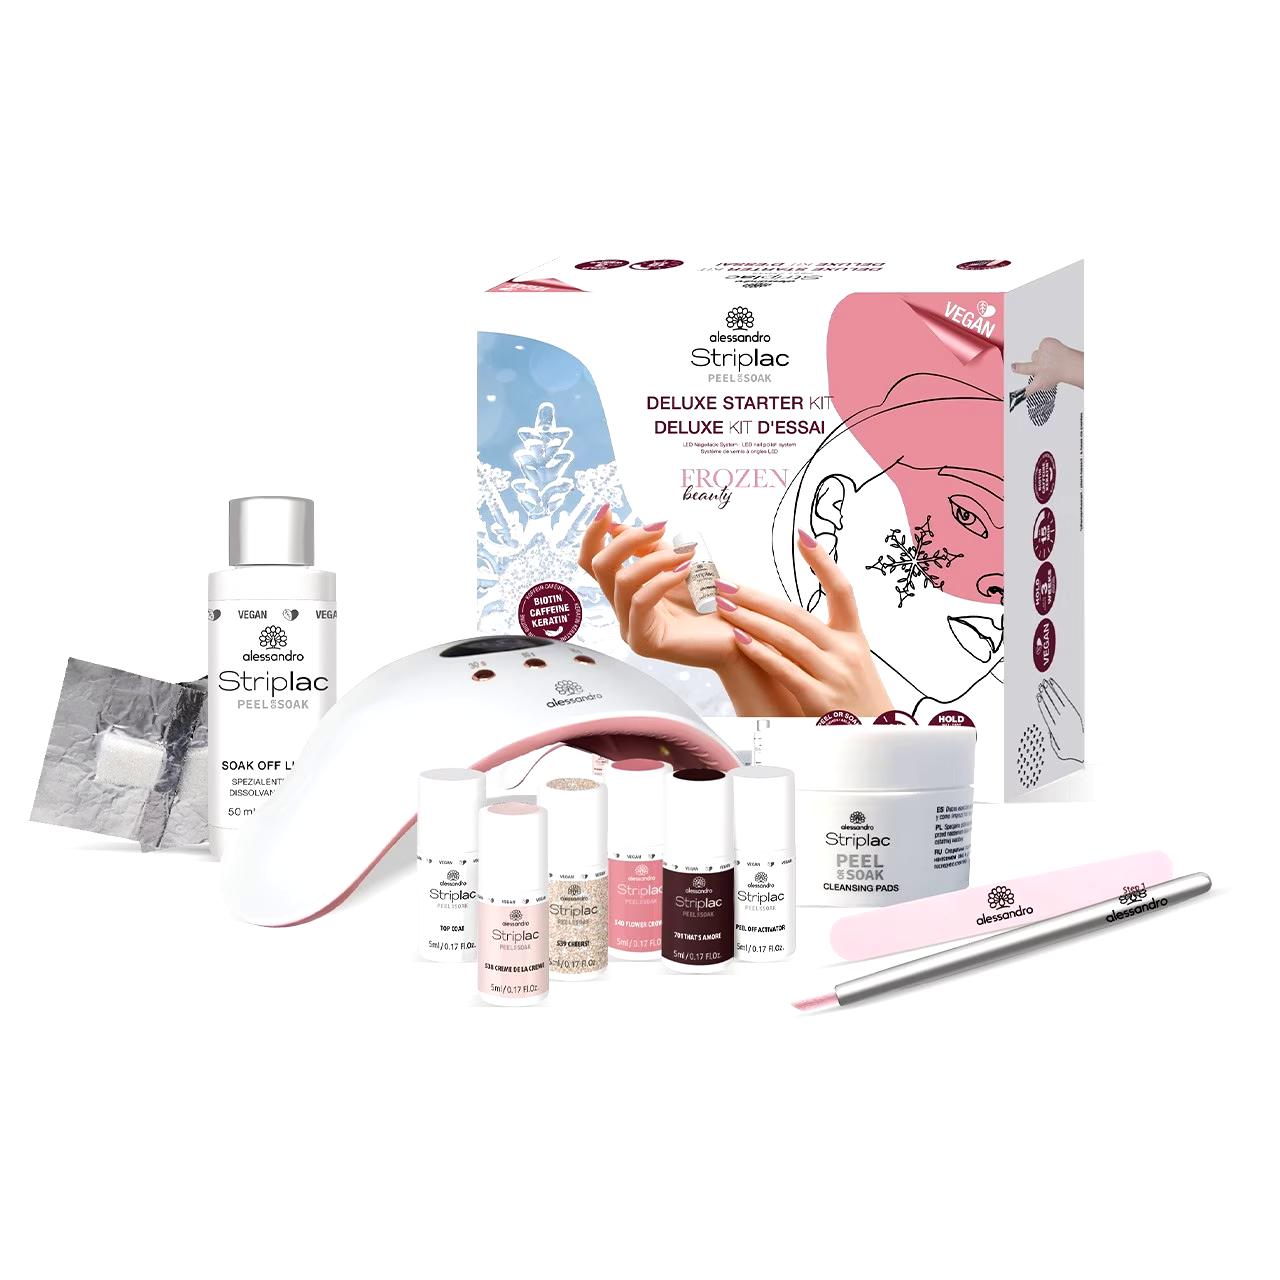 StriplacDeluxe Starter Kit Frozen Beauty
Nail care set